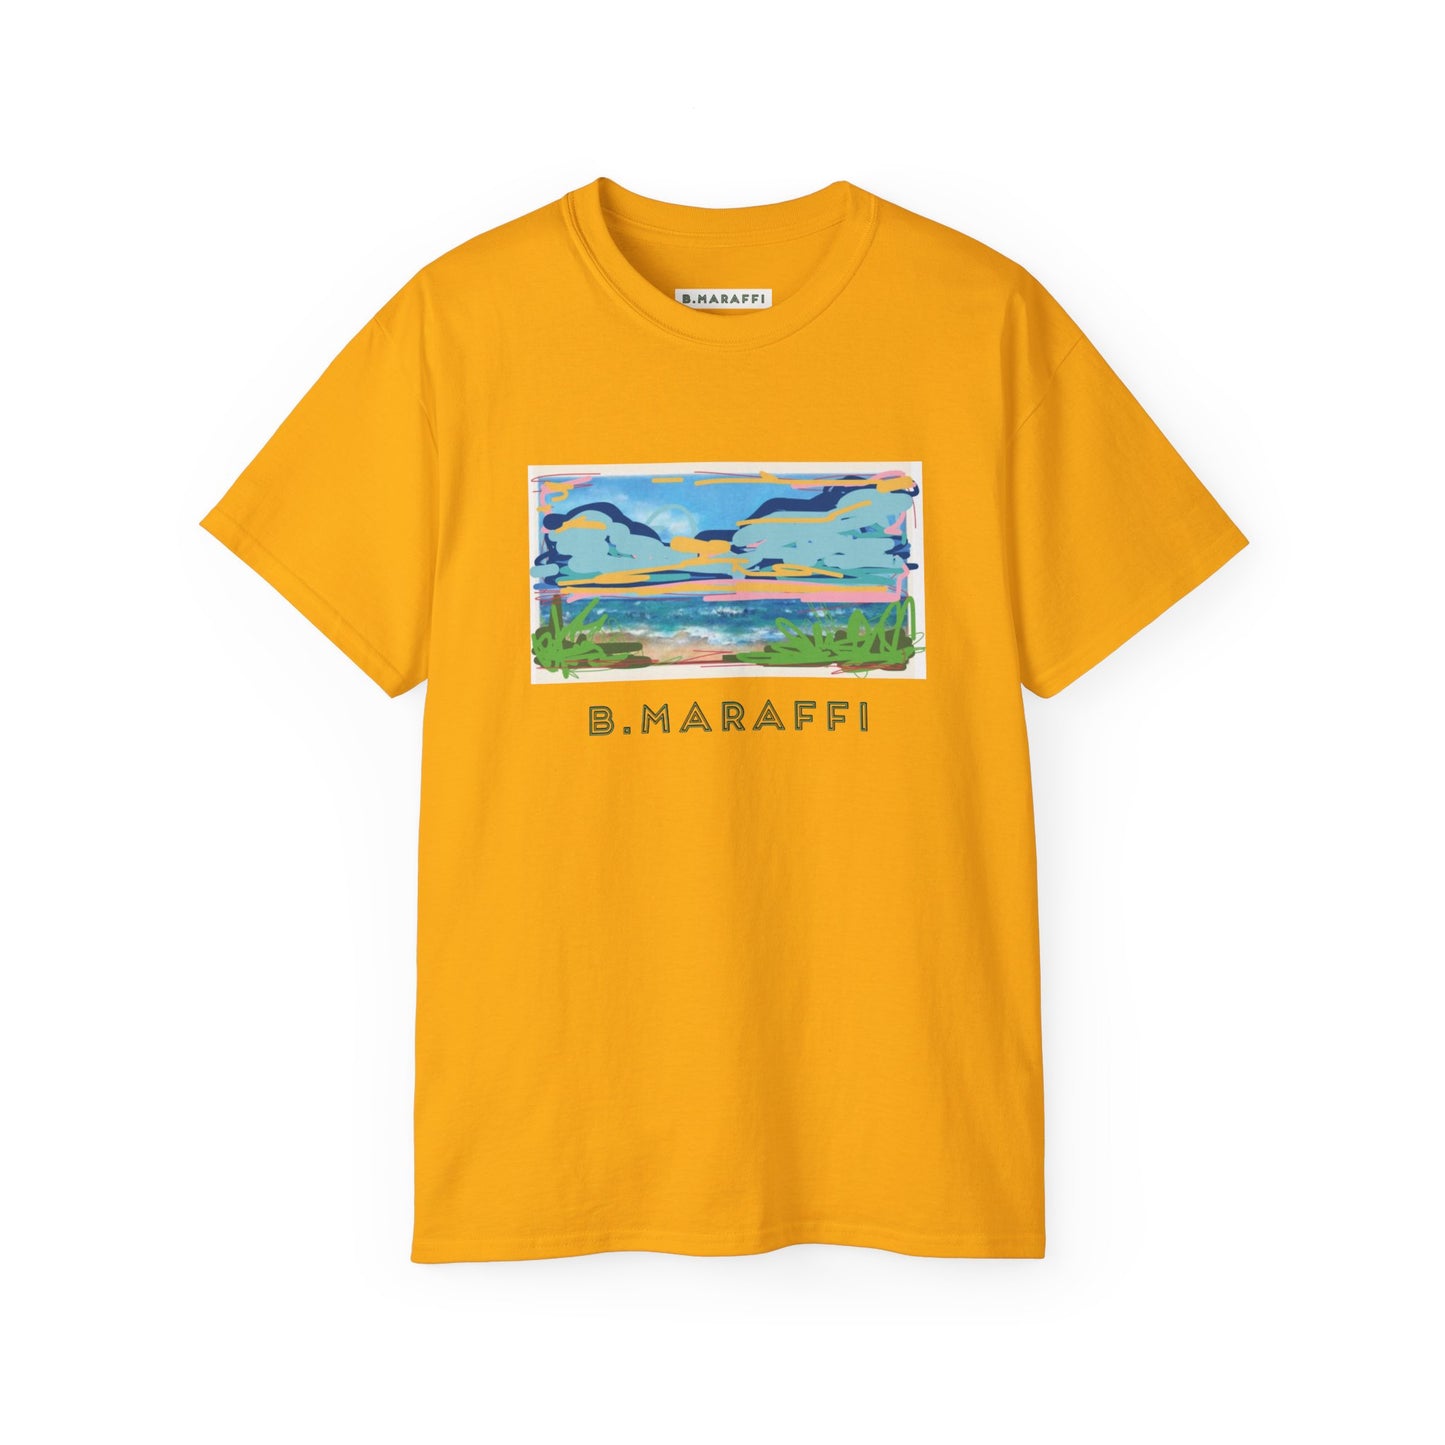 B.Maraffi Cotton T-shirt - Just Beachy